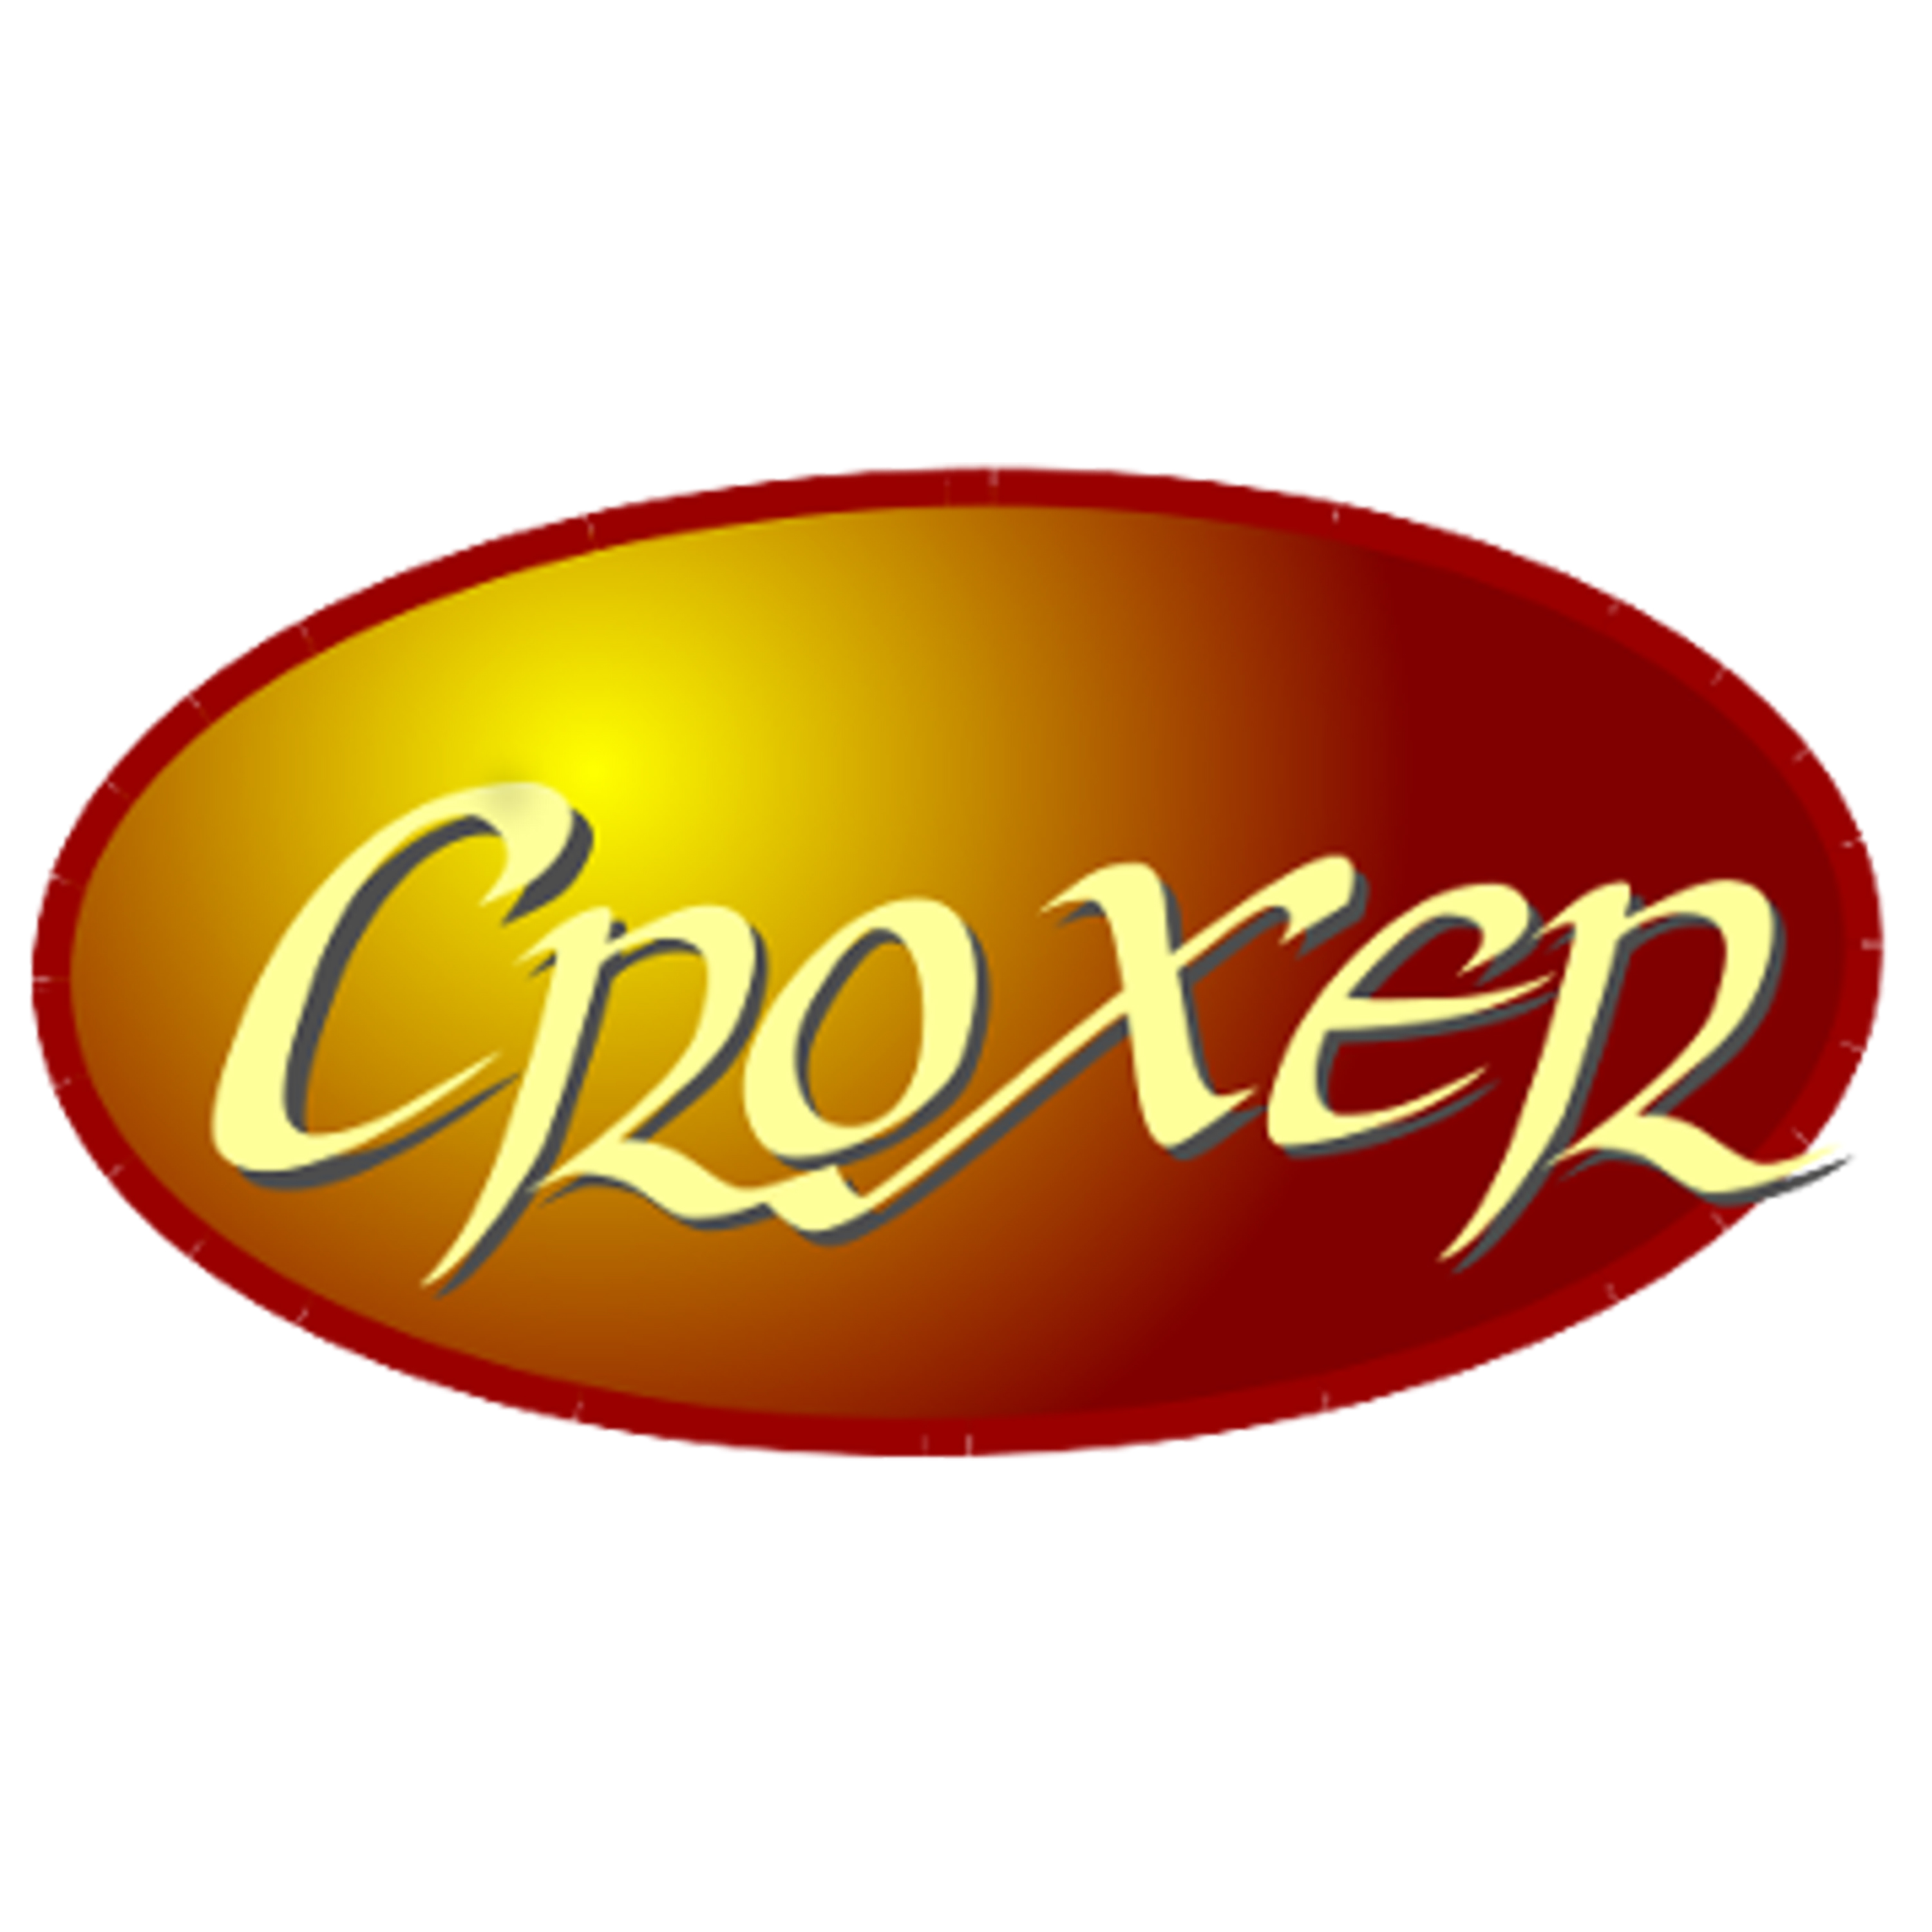 Croxer Brauerei